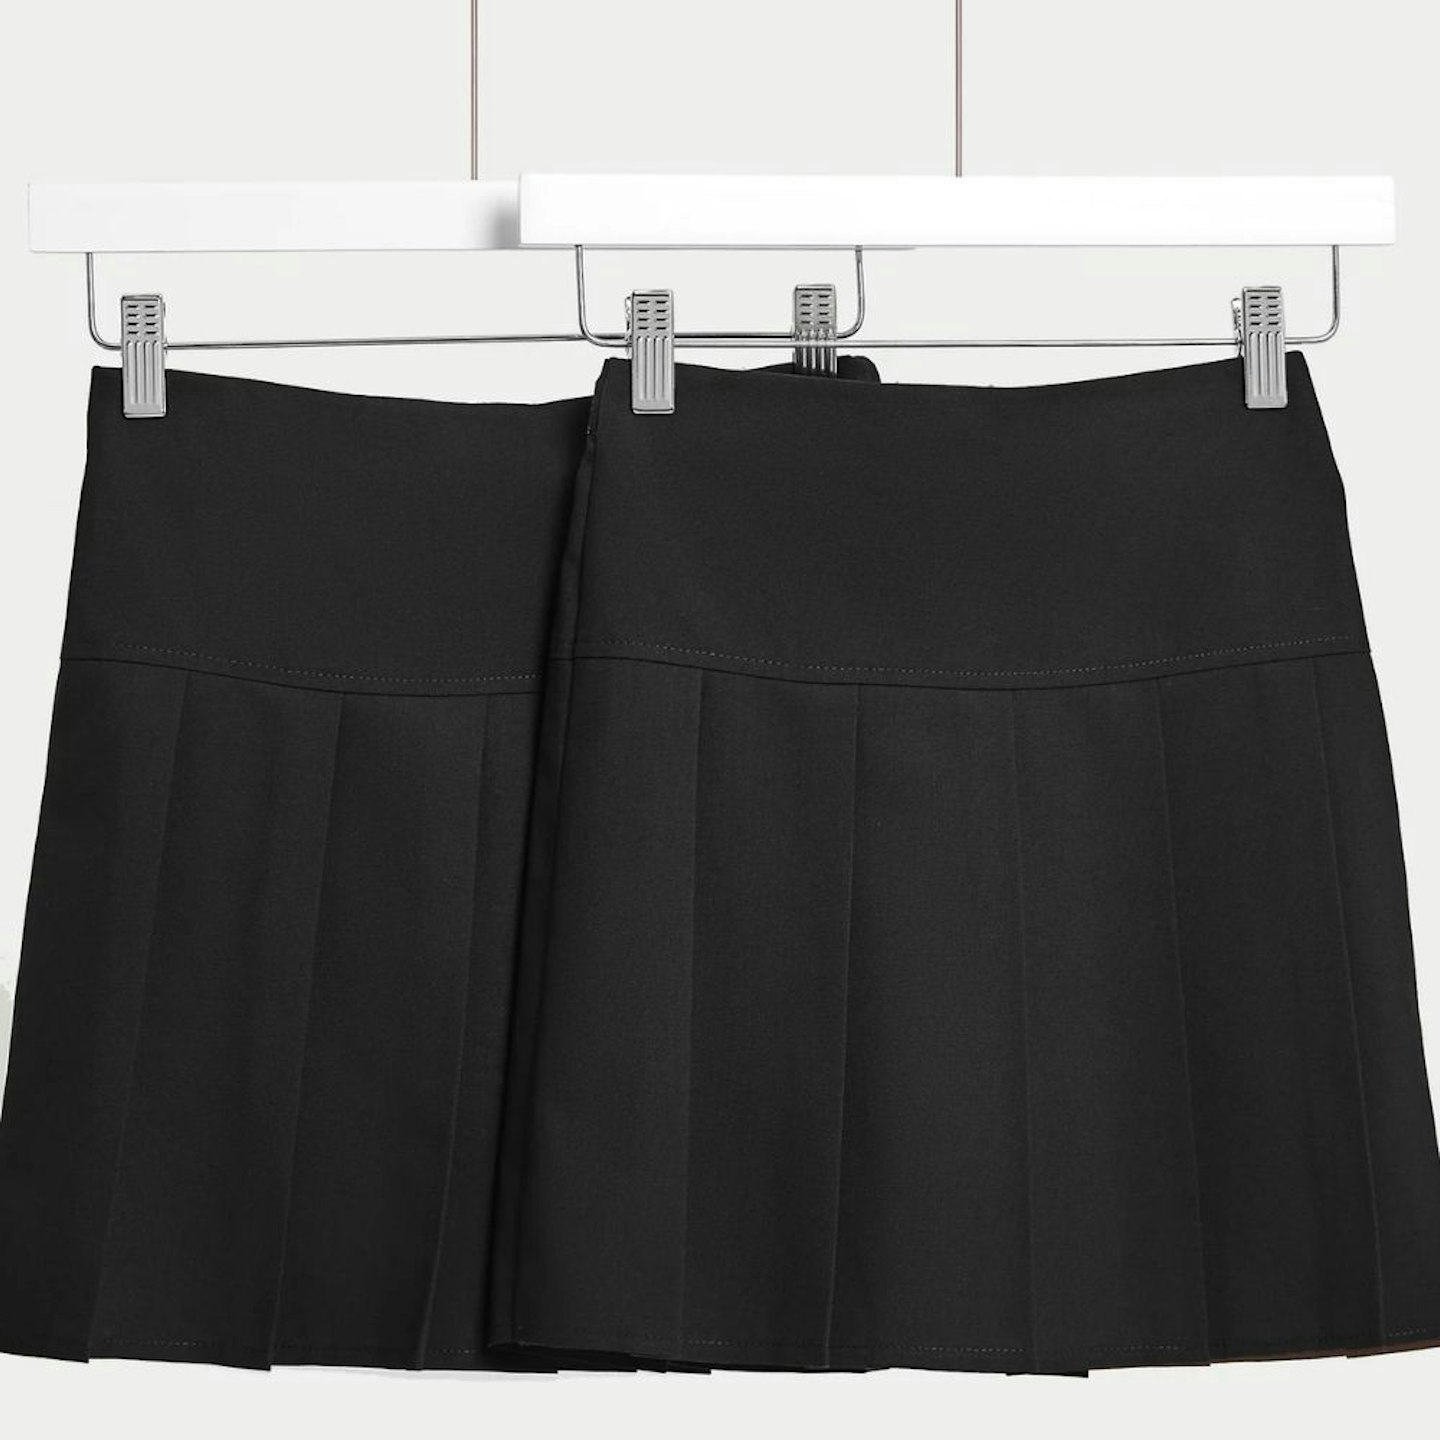 M&S 2pk Girls' Crease Resistant School Skirts (2-16 Yrs)